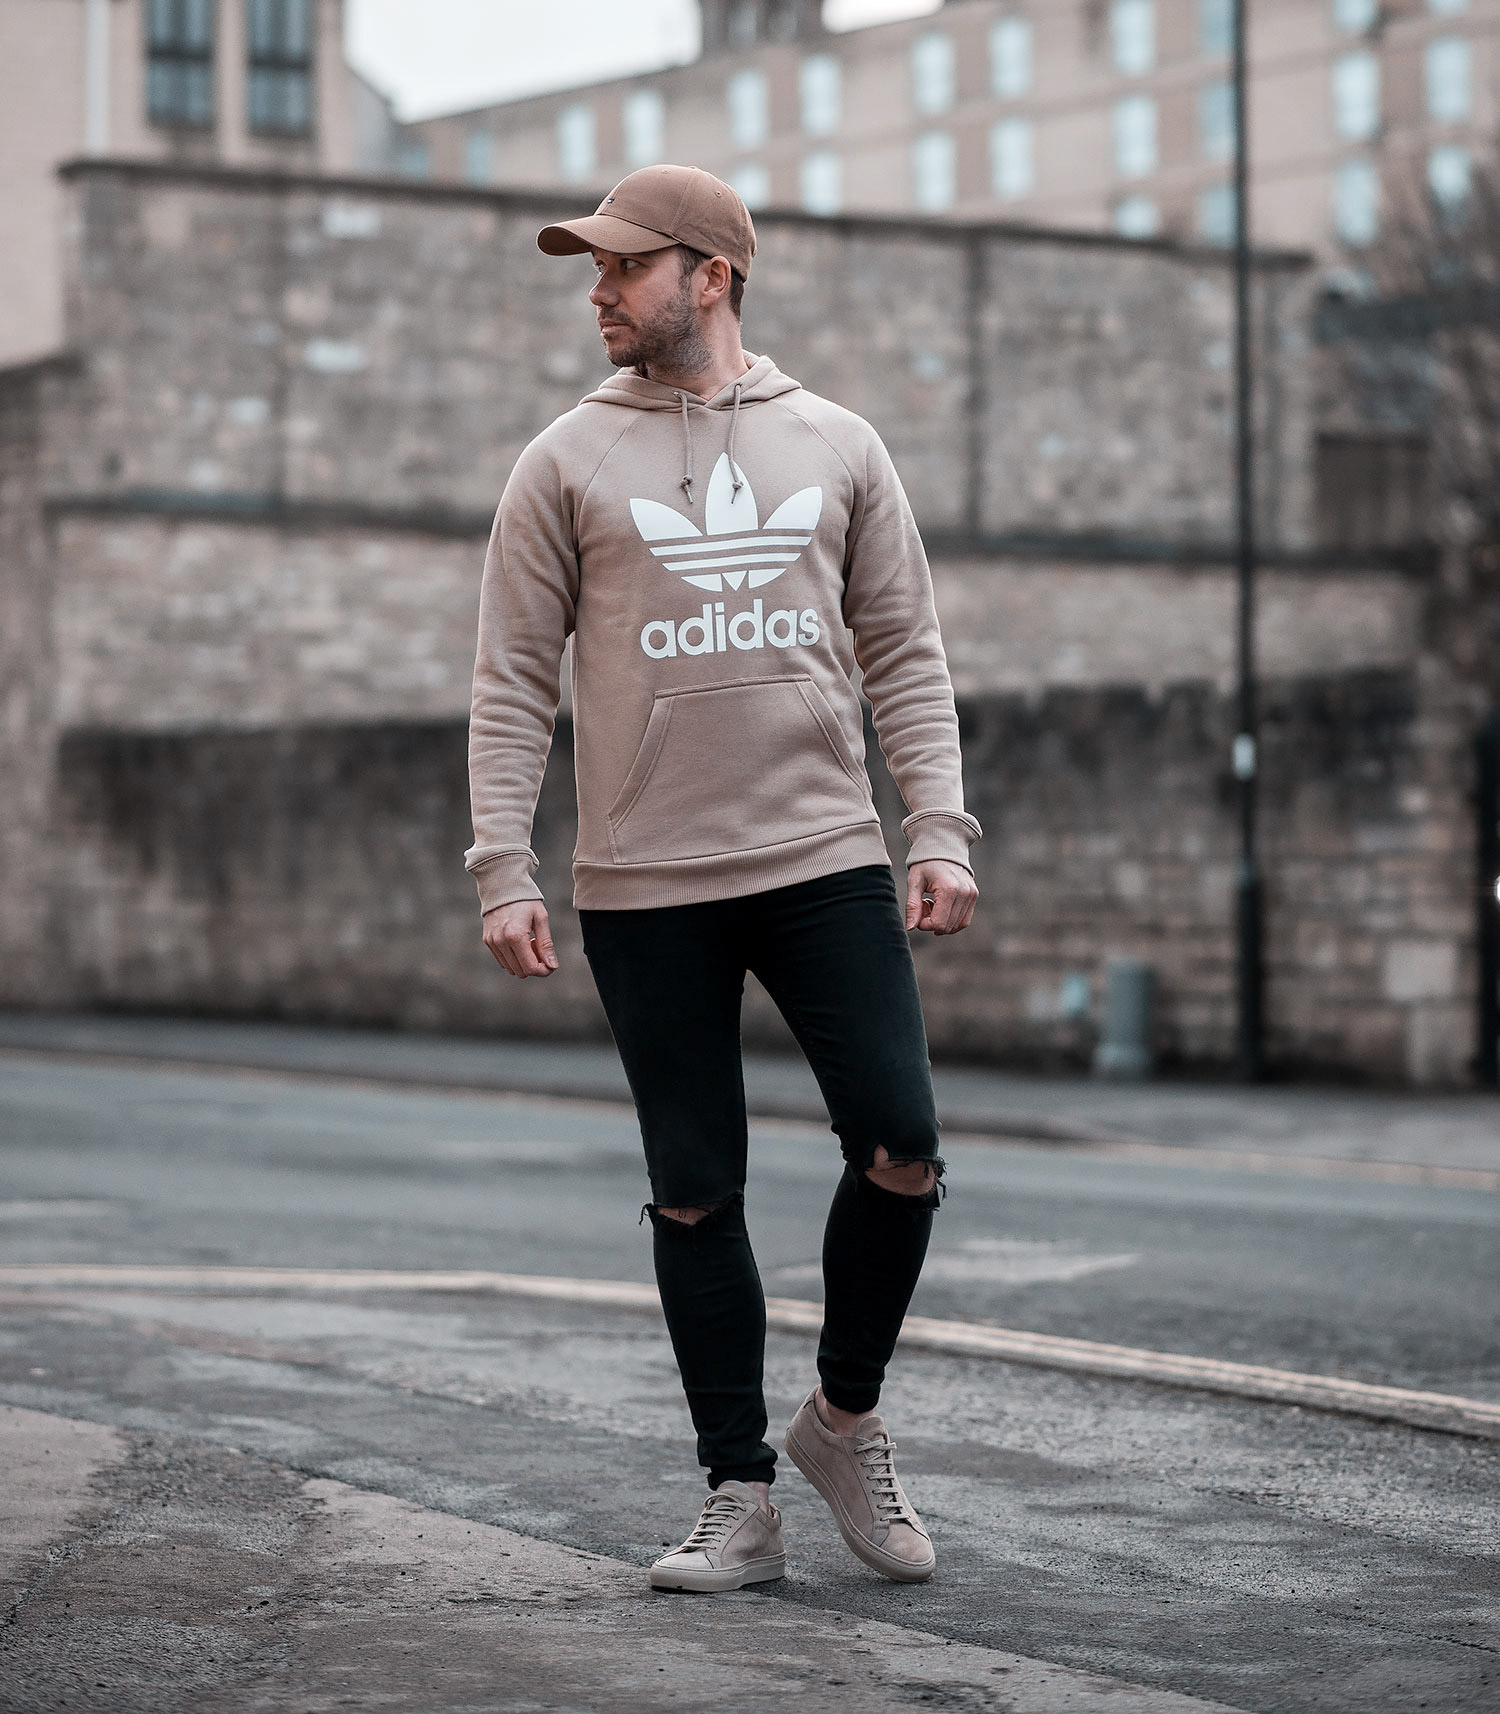 Adidas Trefoil Sweatshirt Street Style 